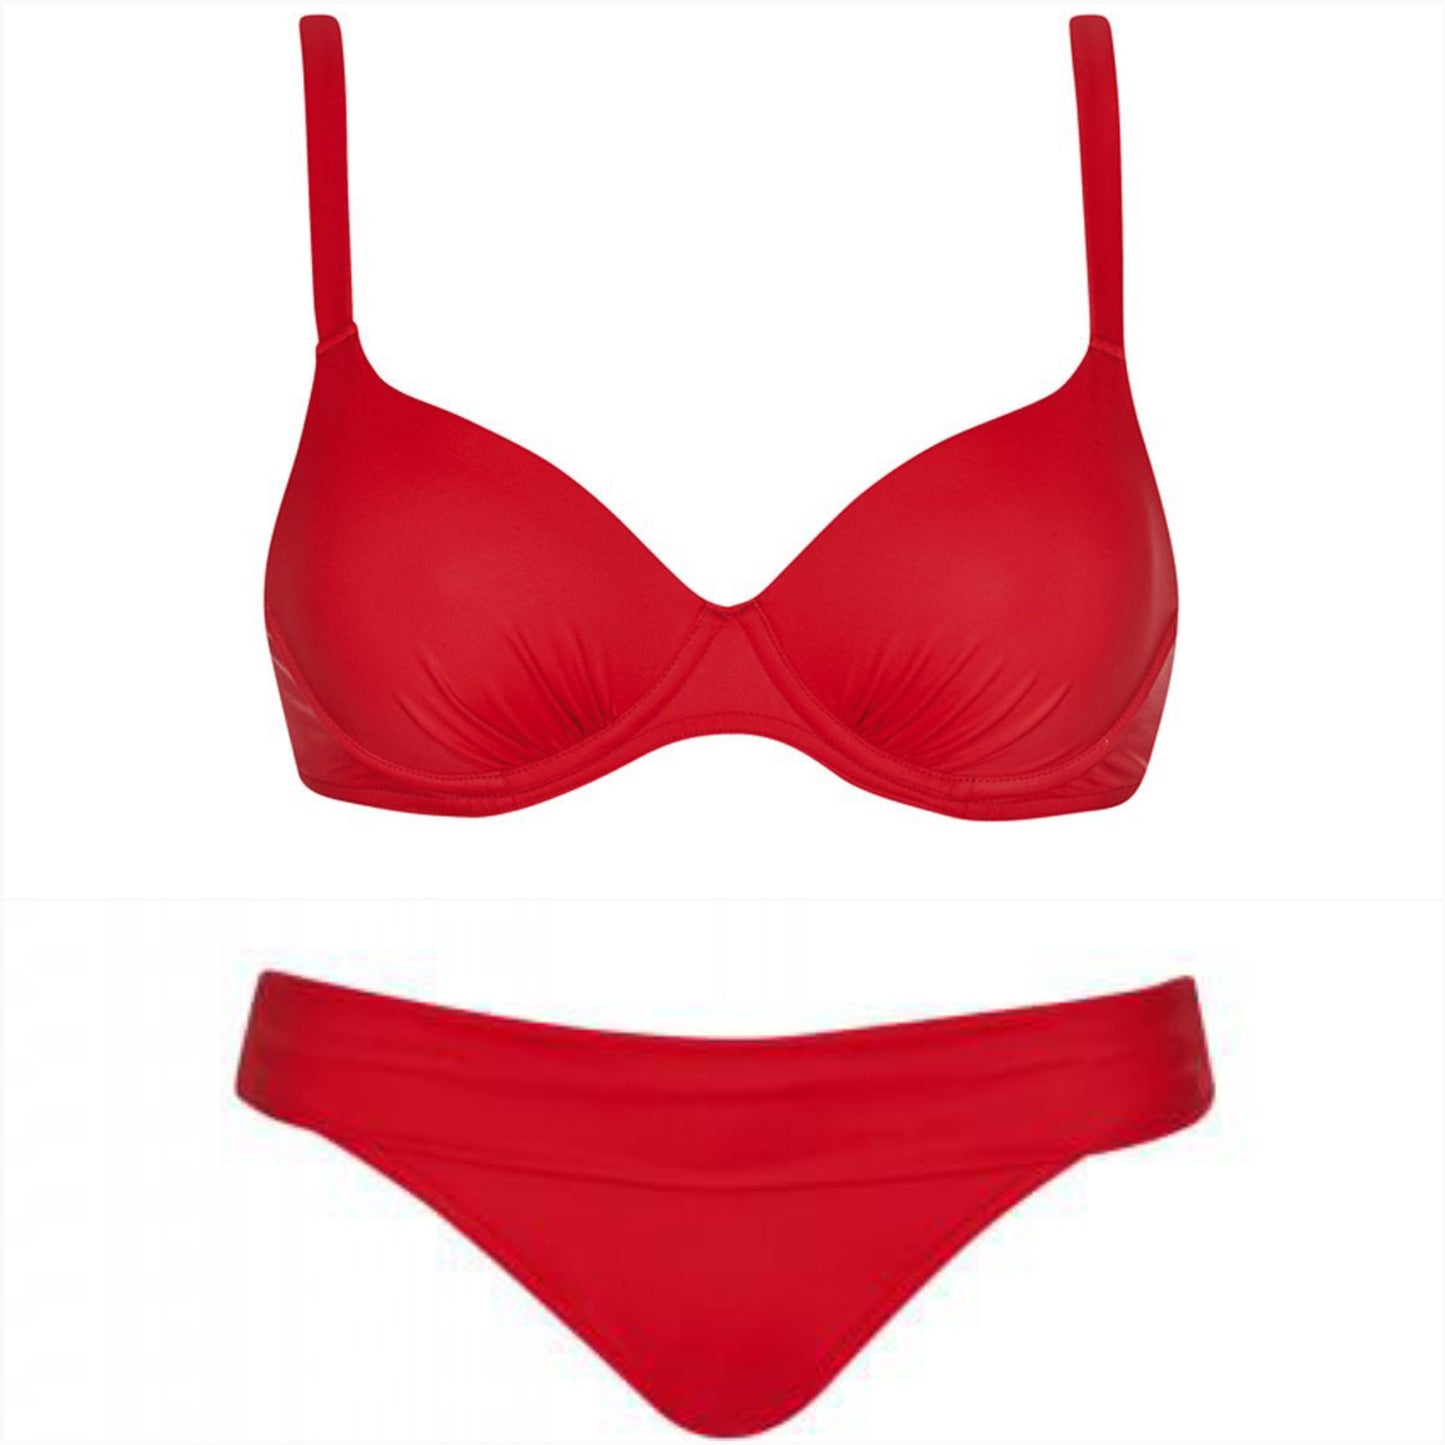 Olympia voorgevormde Bikini met beugel - 31187 en 31202 - rood